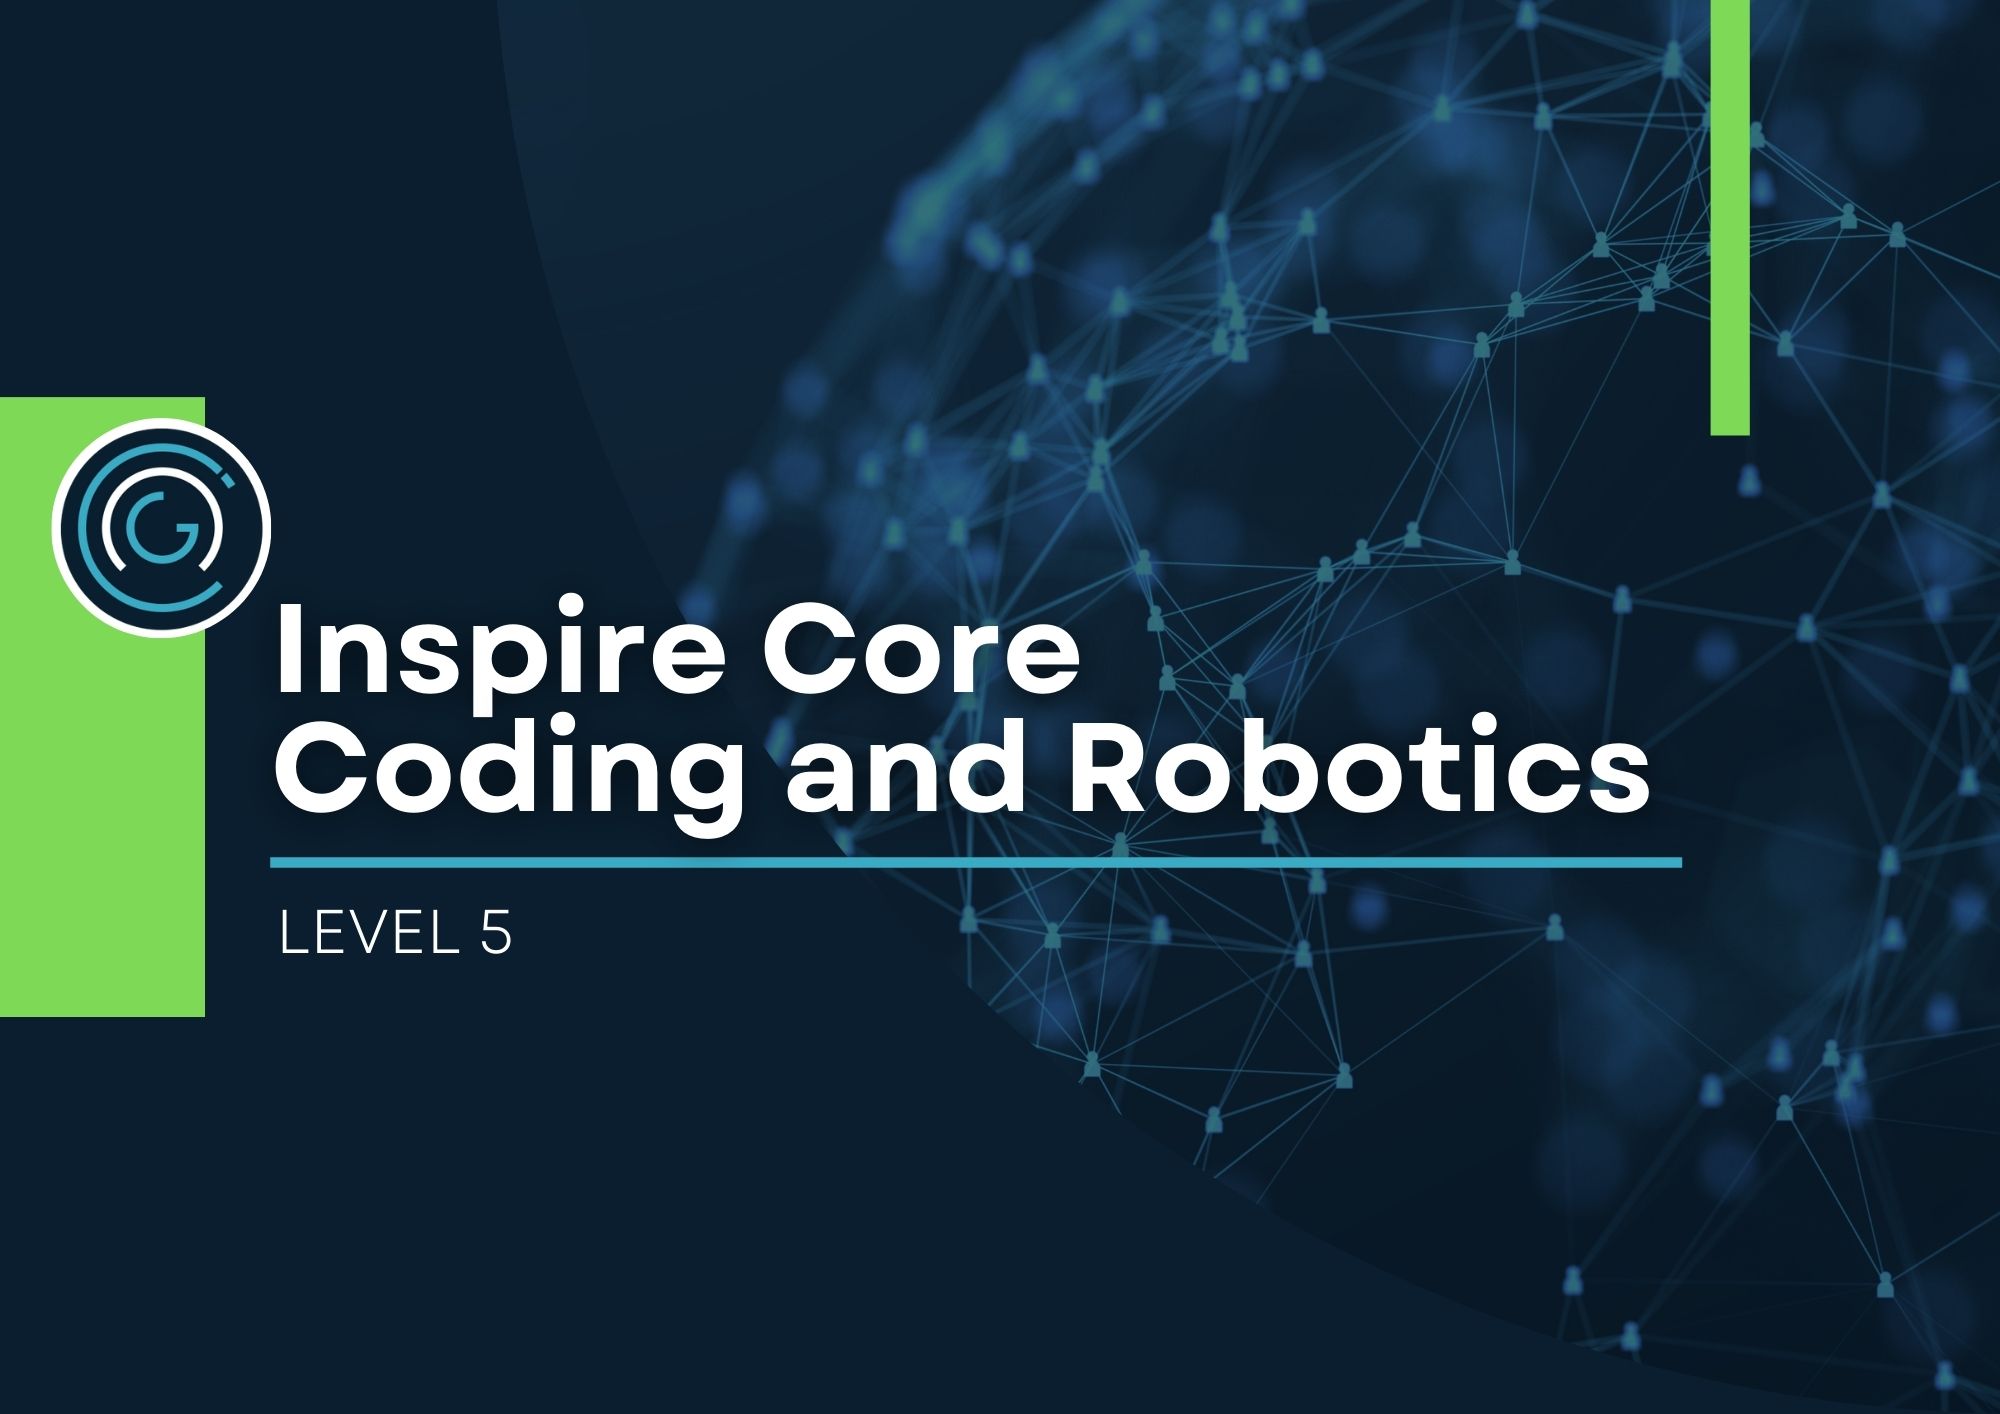 Level 5 Inspire Coding and Robotics